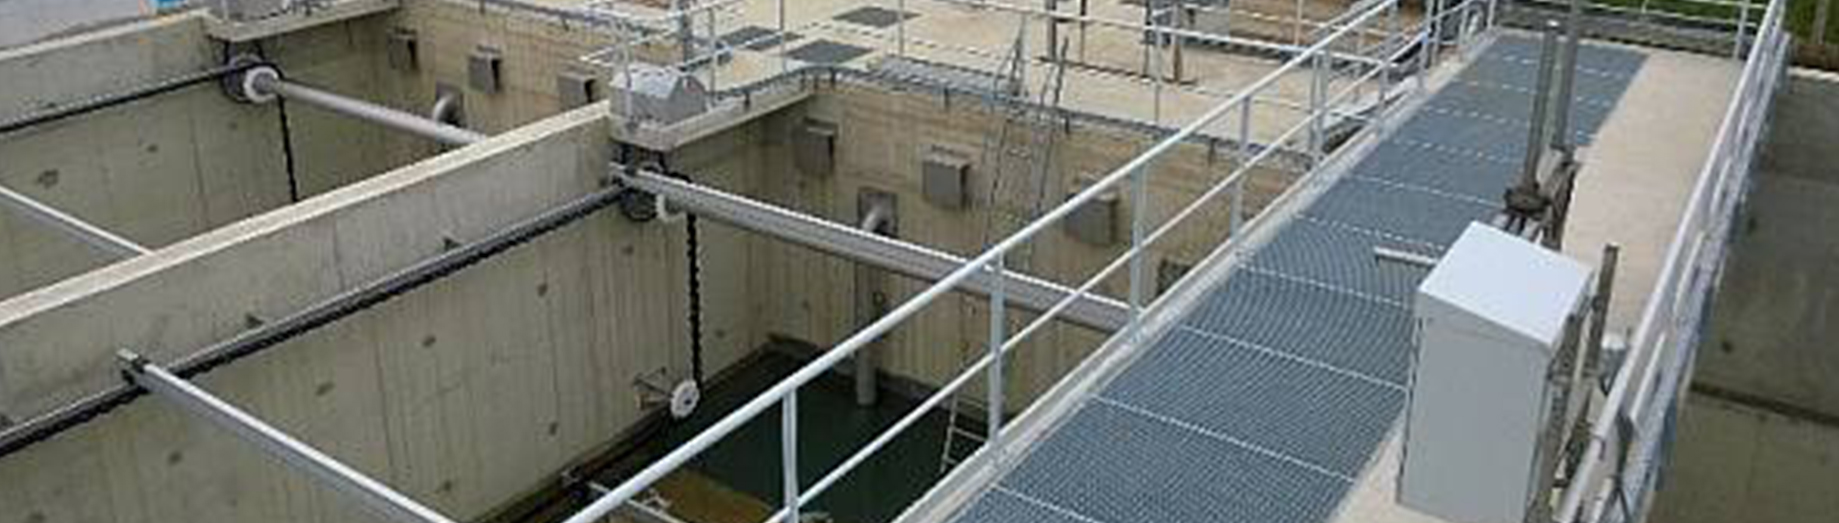 Rehabilitation of 3 Wastewater Treatment Plants in IASI province (IASI 2)